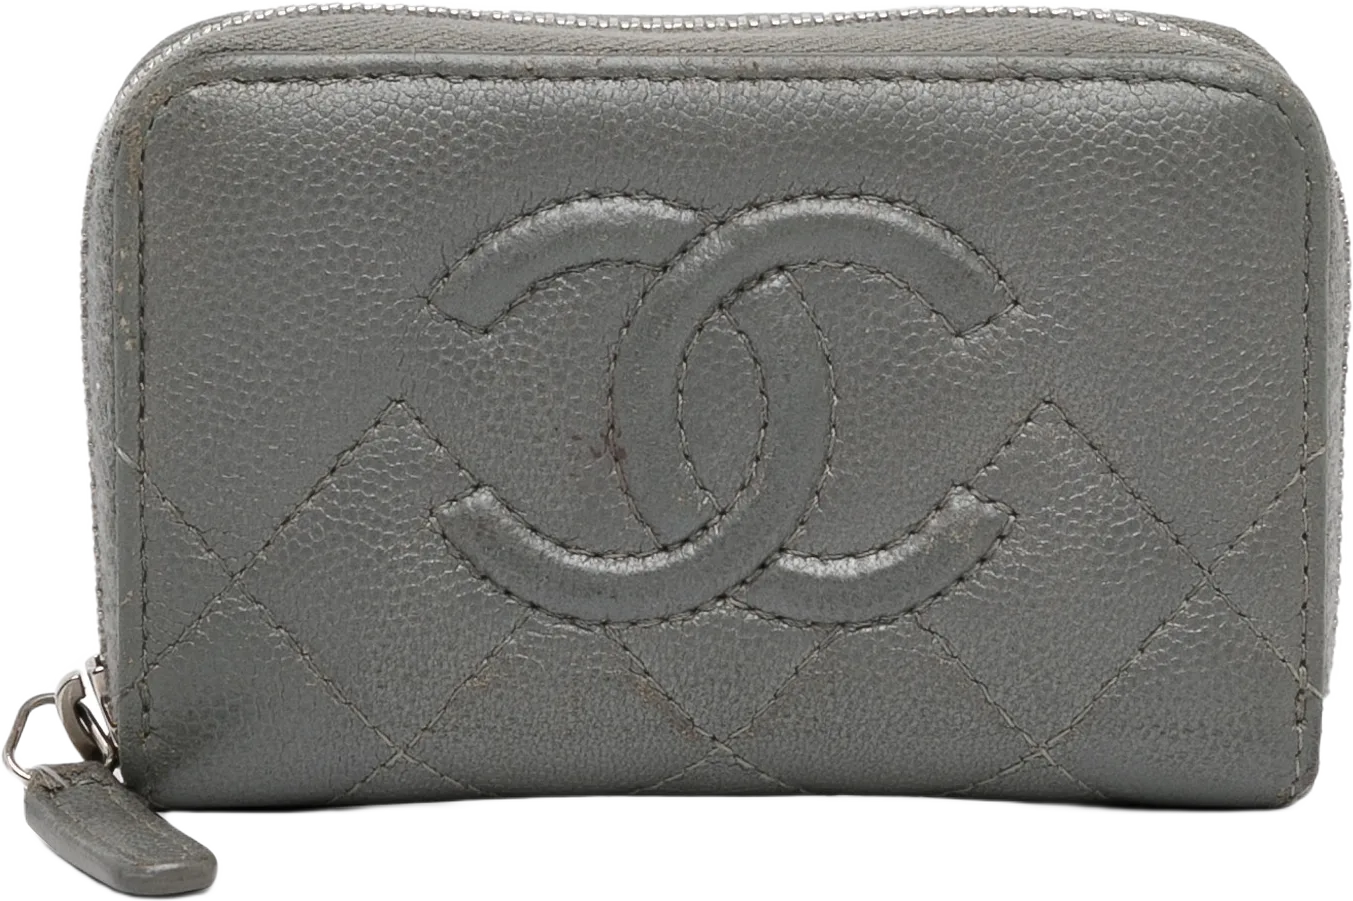 Chanel Cc Caviar Zip Coin Pouch